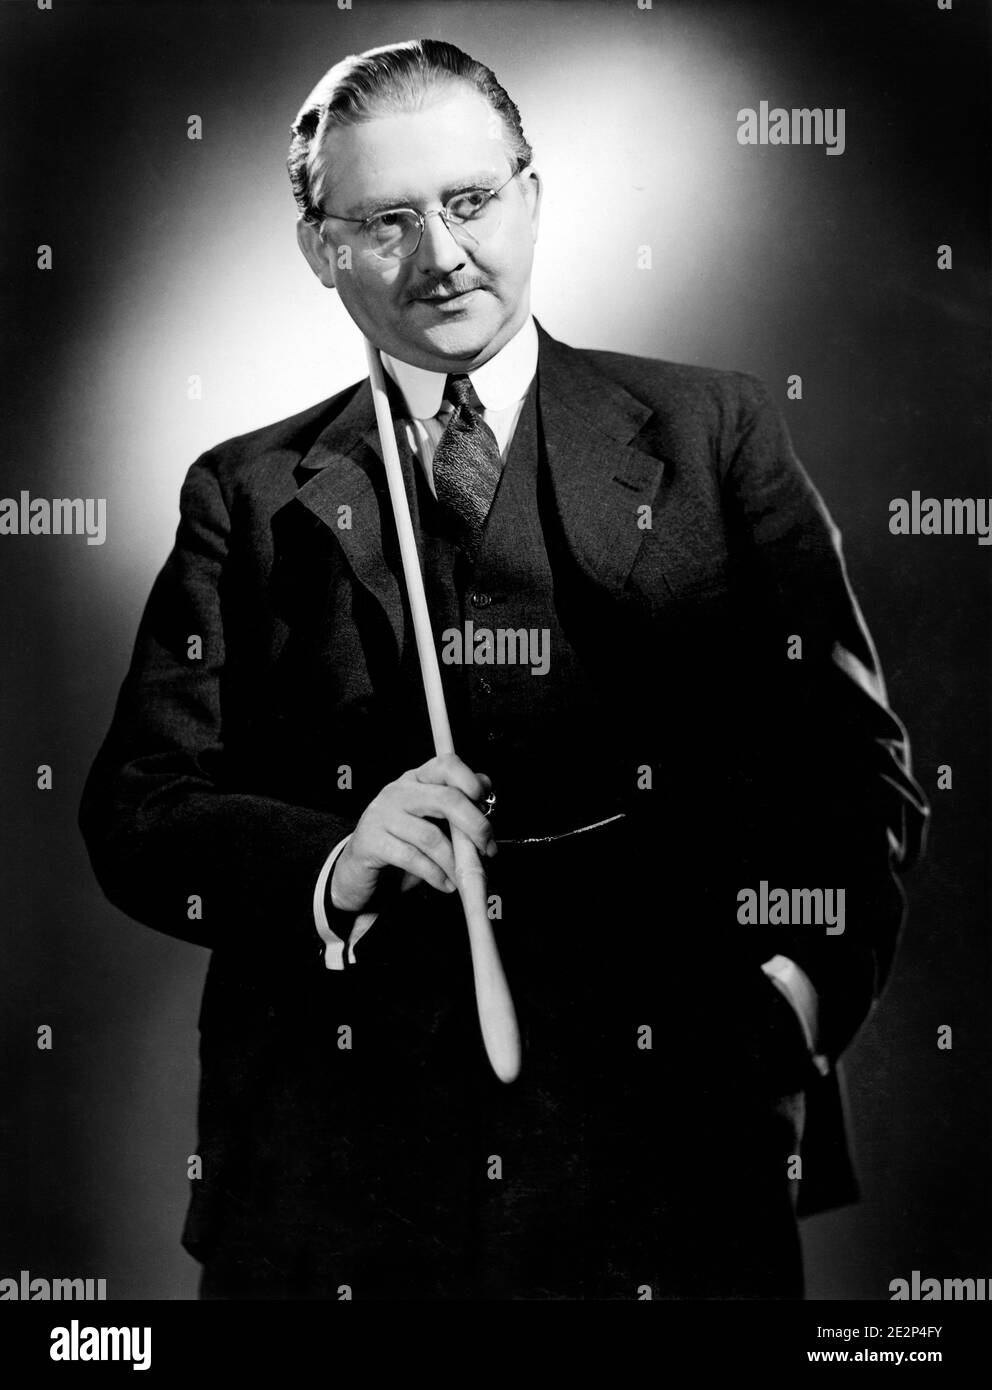 Stig Jarrell, Retrato de publicidad para la película sueca, "Torment", sueco: "HTS", Svensk Filmindustri, 1944 Foto de stock